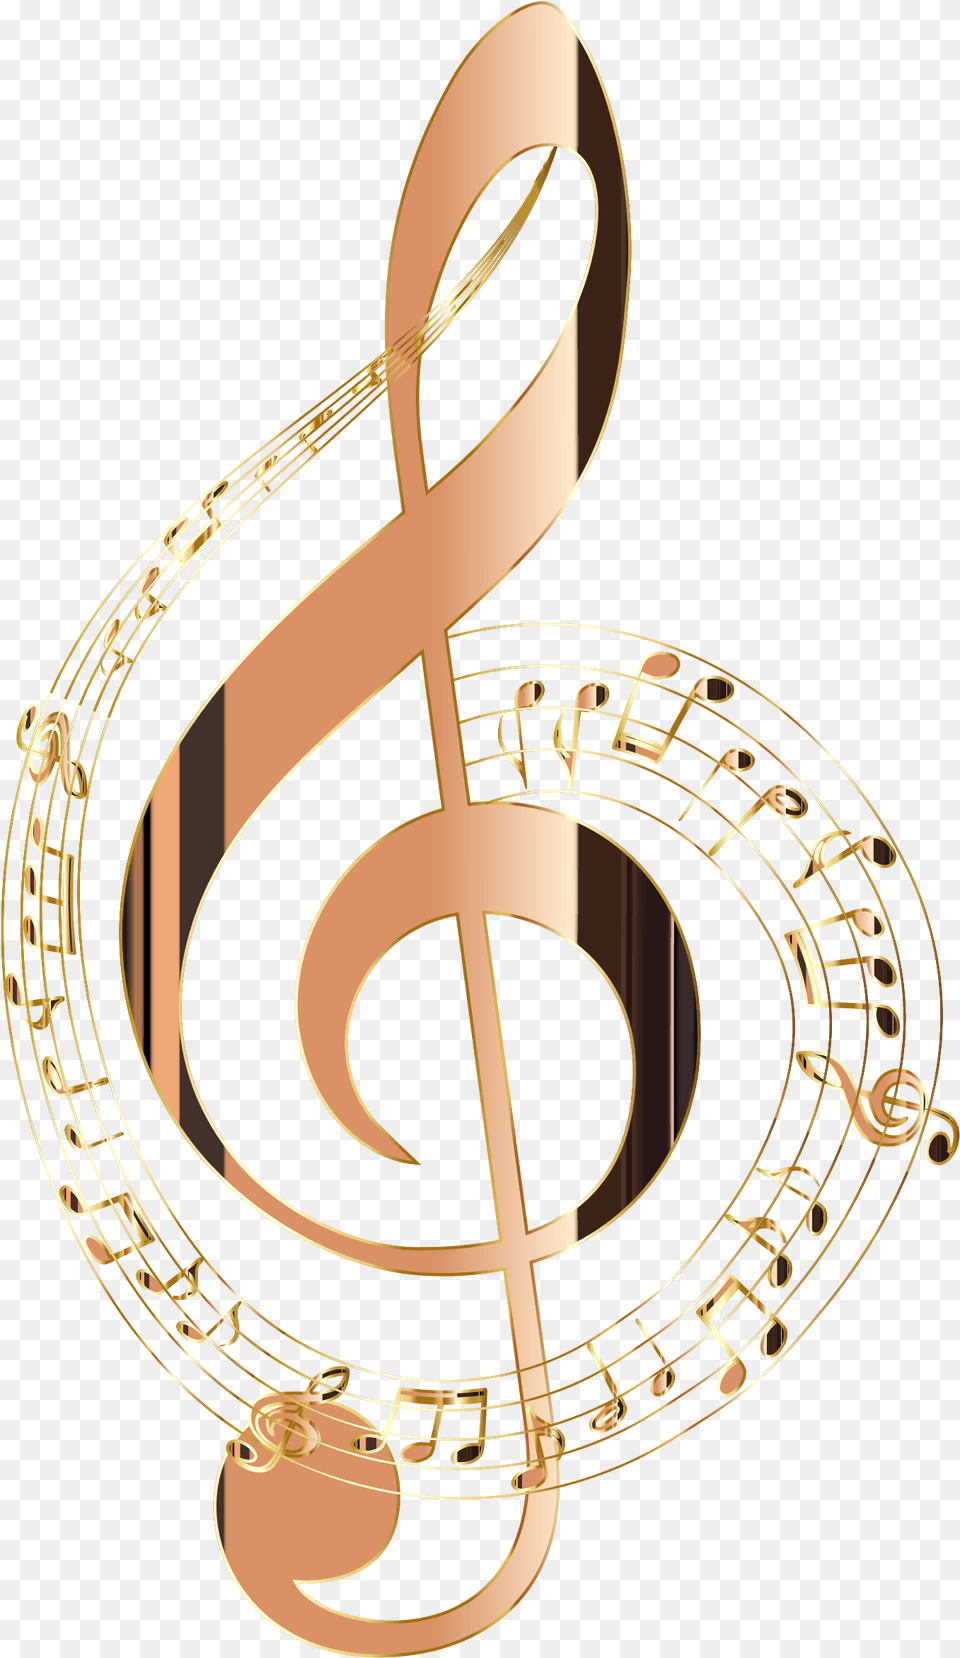 Music Notes Clipart Hearing Music Notes Hd Musical Notes No Background, Symbol, Text, Festival, Hanukkah Menorah Png